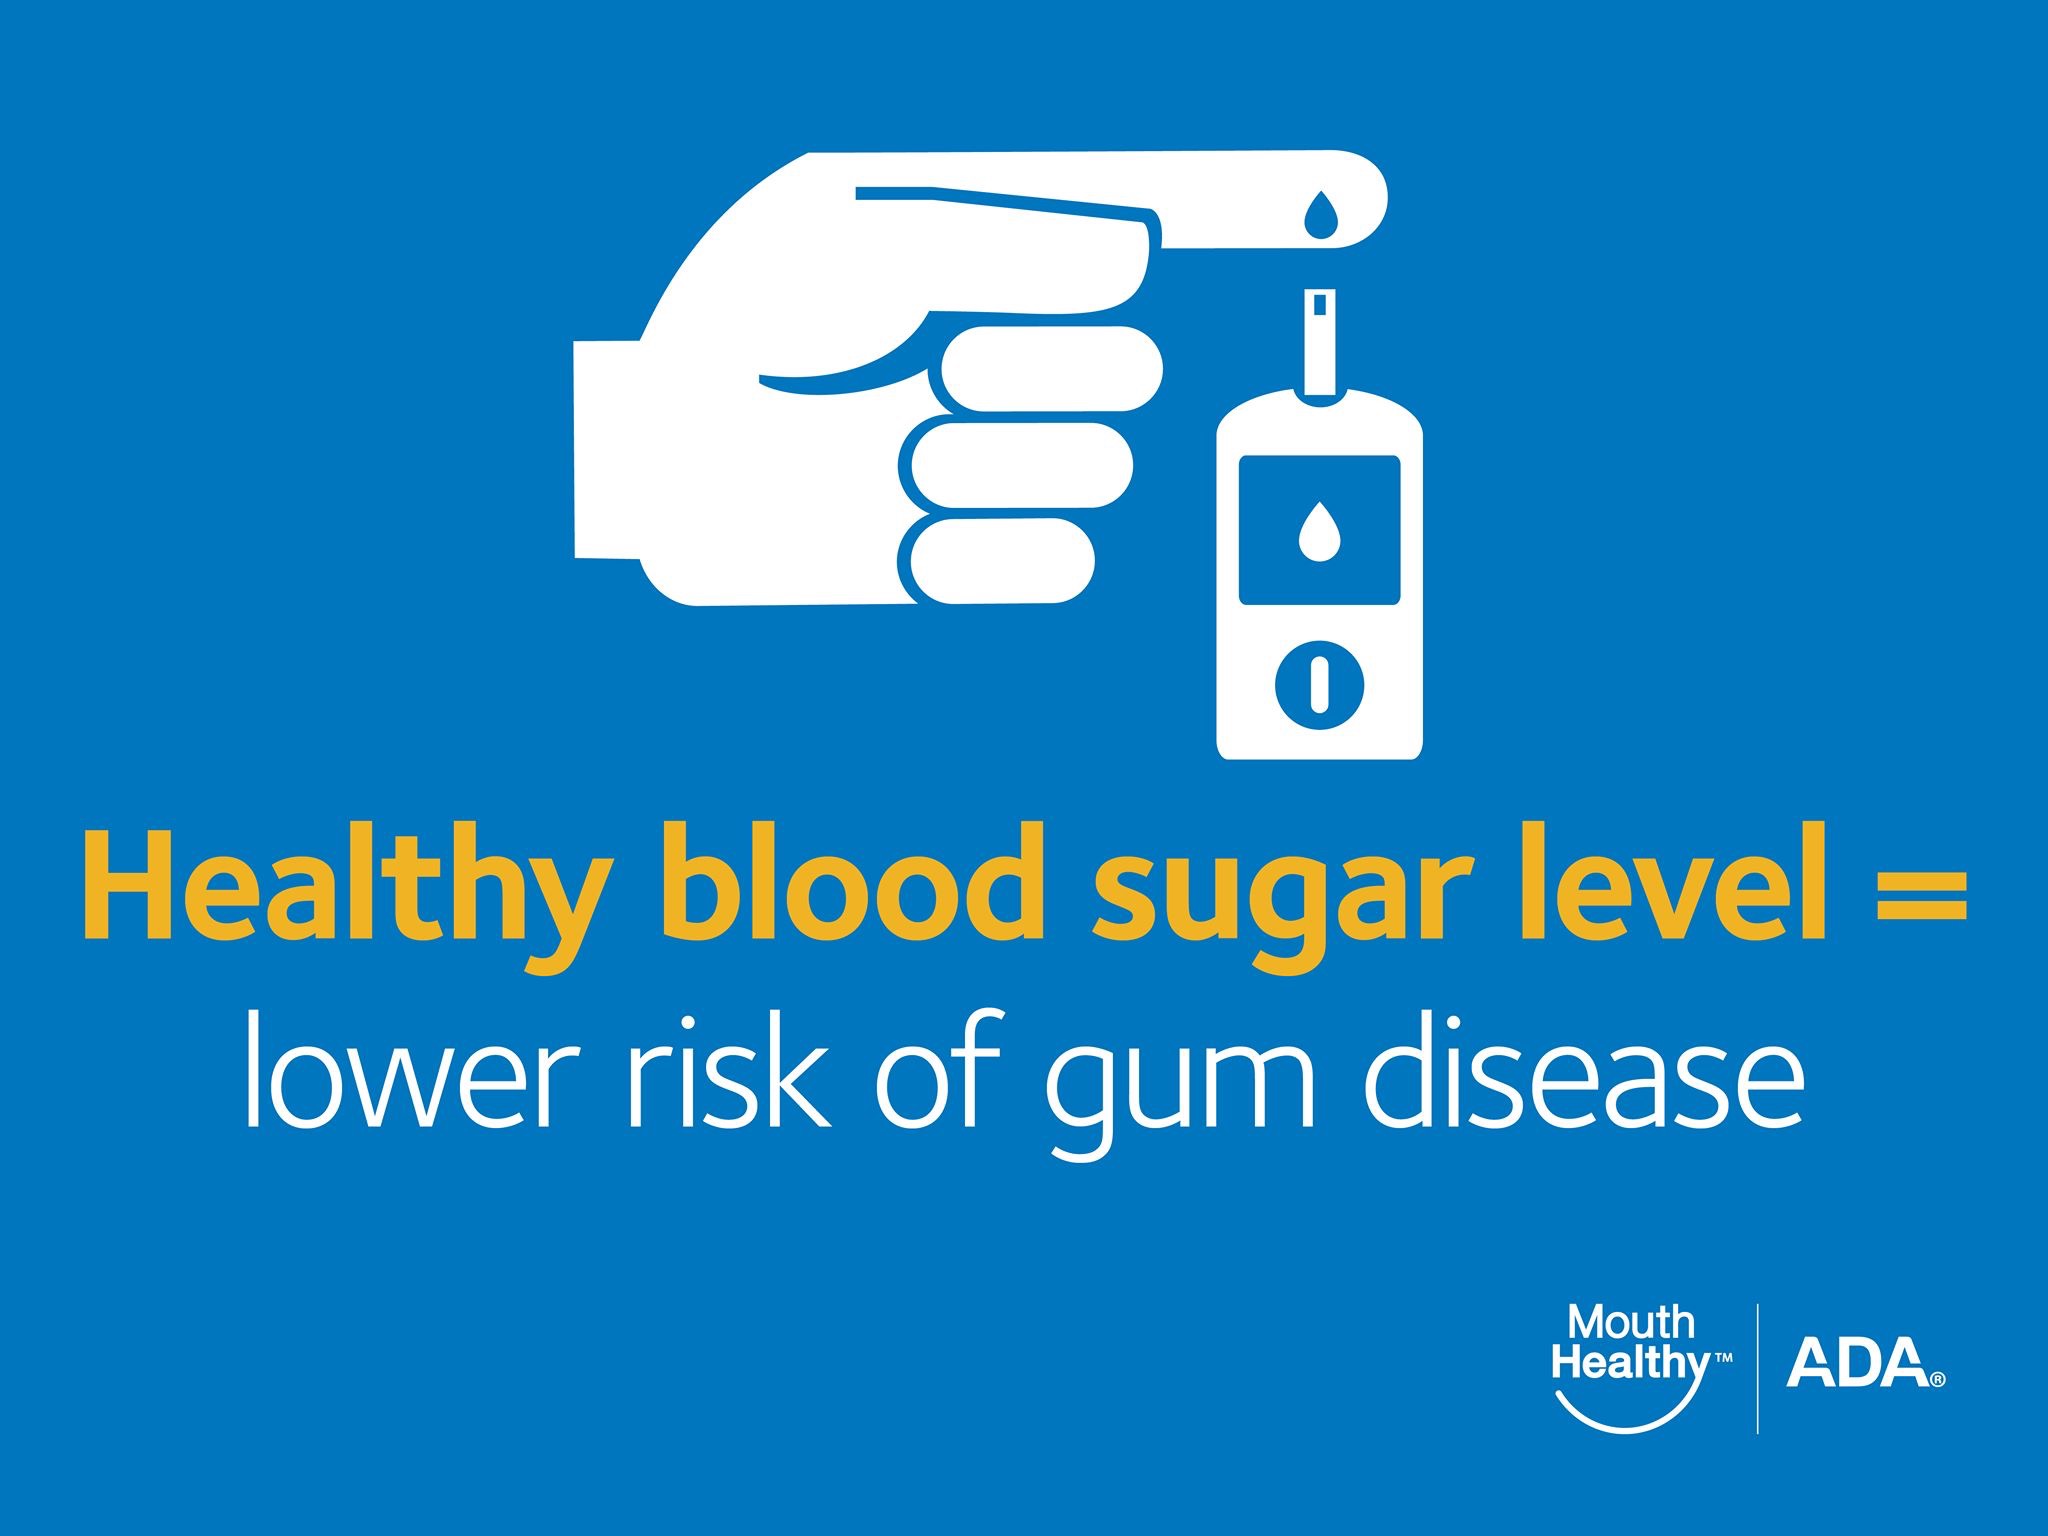 ADA's Healthy blood sugar level = lower risk of gum disease 